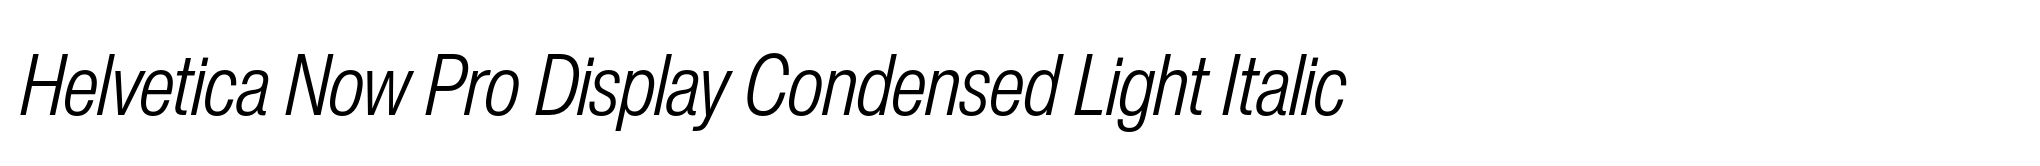 Helvetica Now Pro Display Condensed Light Italic image